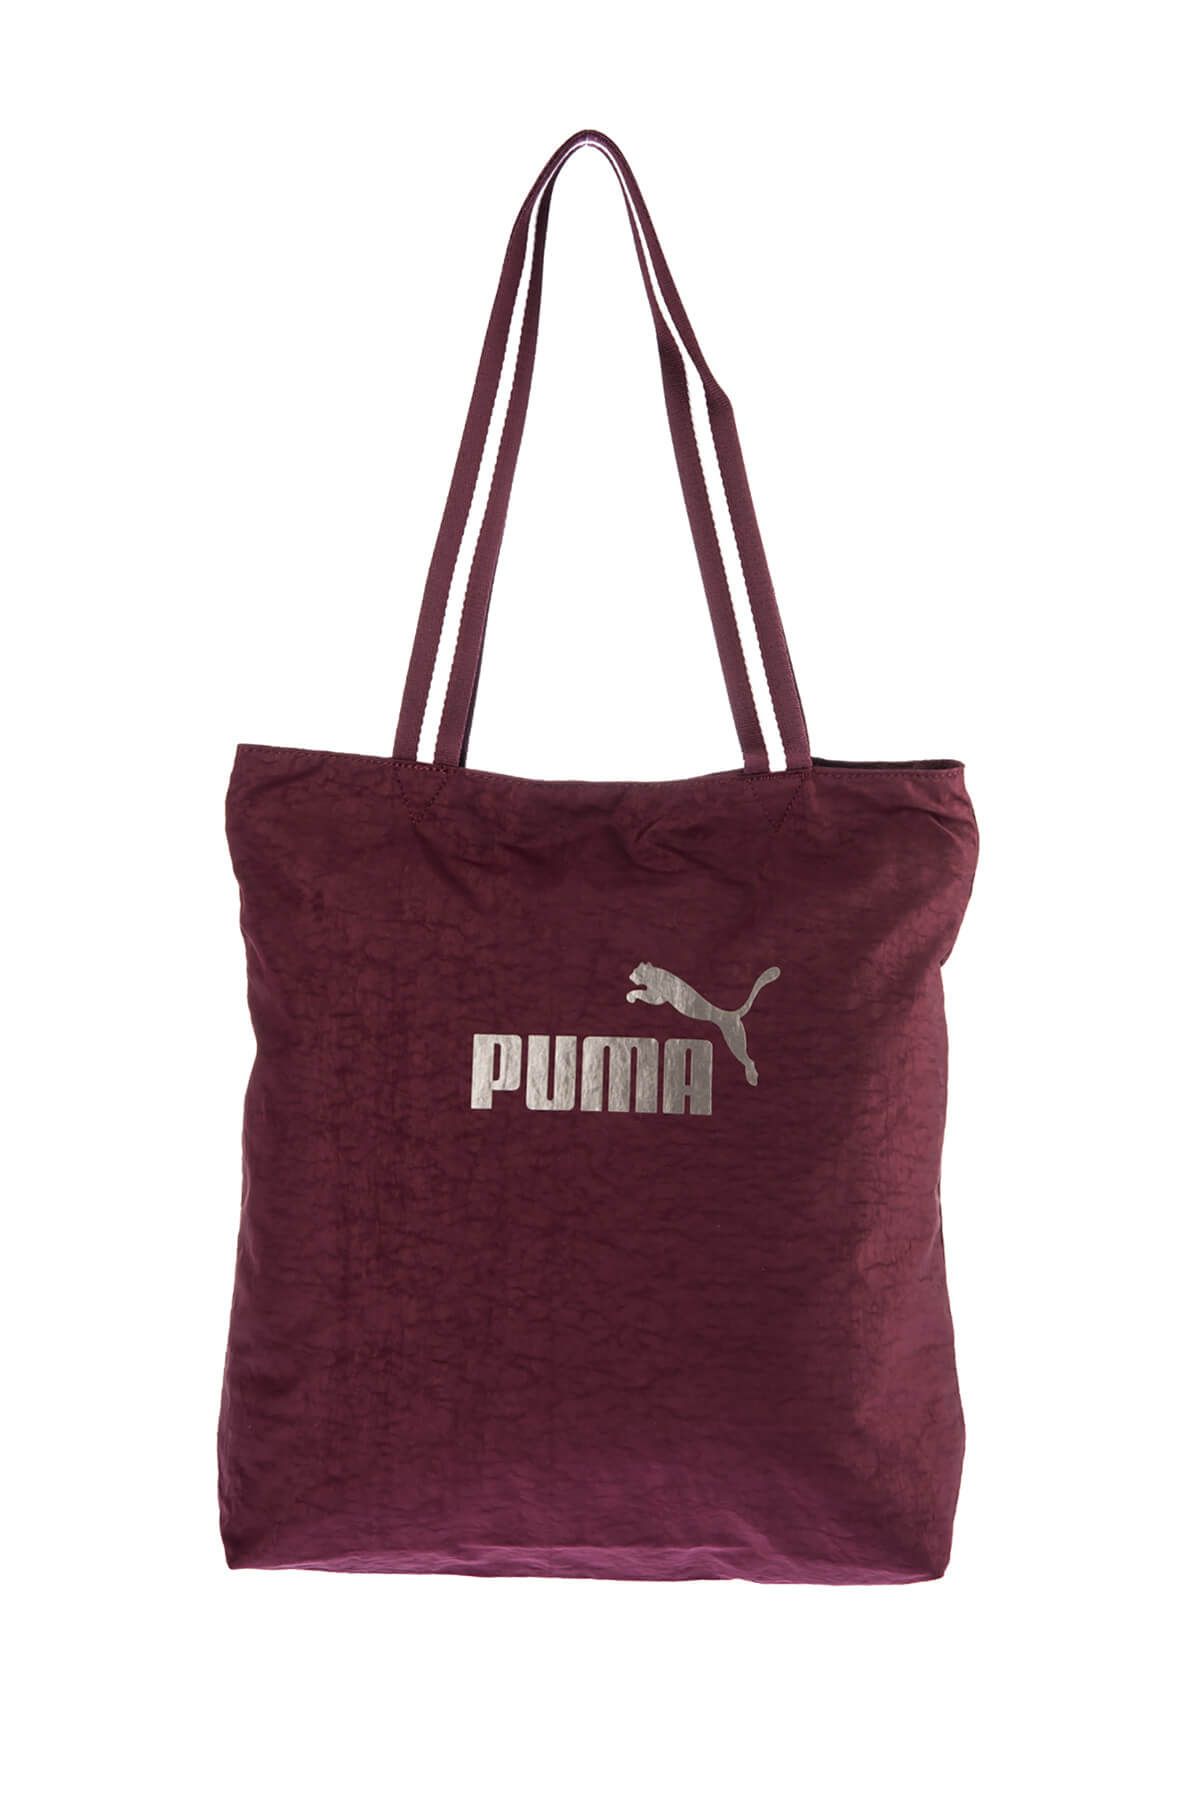 Puma Kadın Çanta - WMN Core Shopper - 07539805